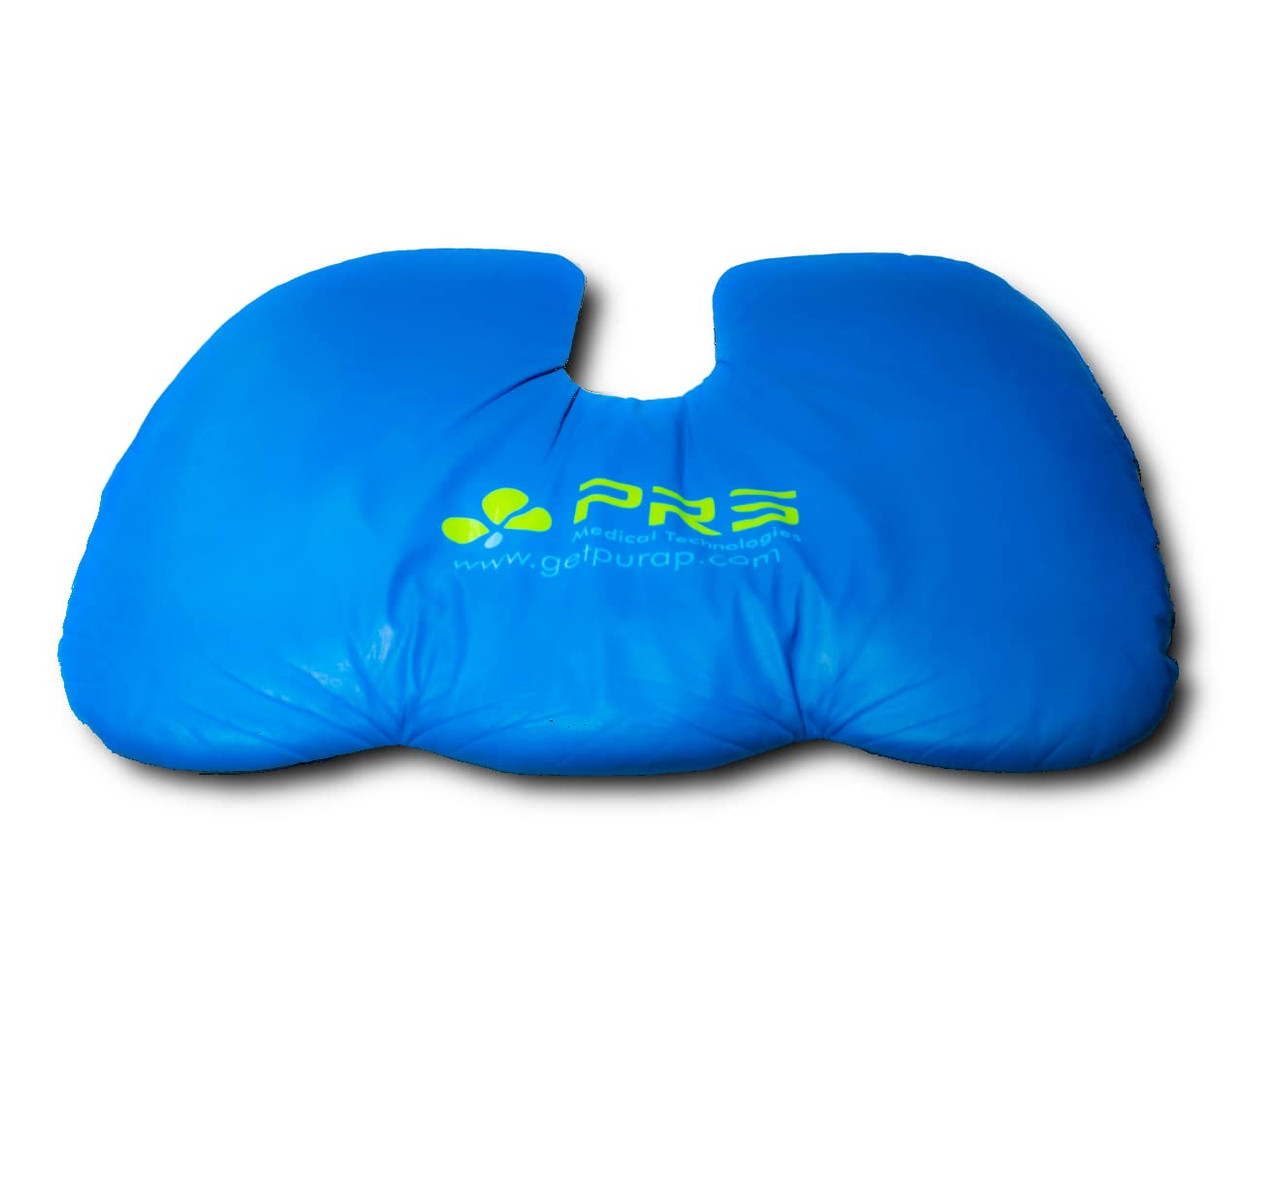 Choosing the right cushion for sciatica - Sciatic Pain Relief Cushion